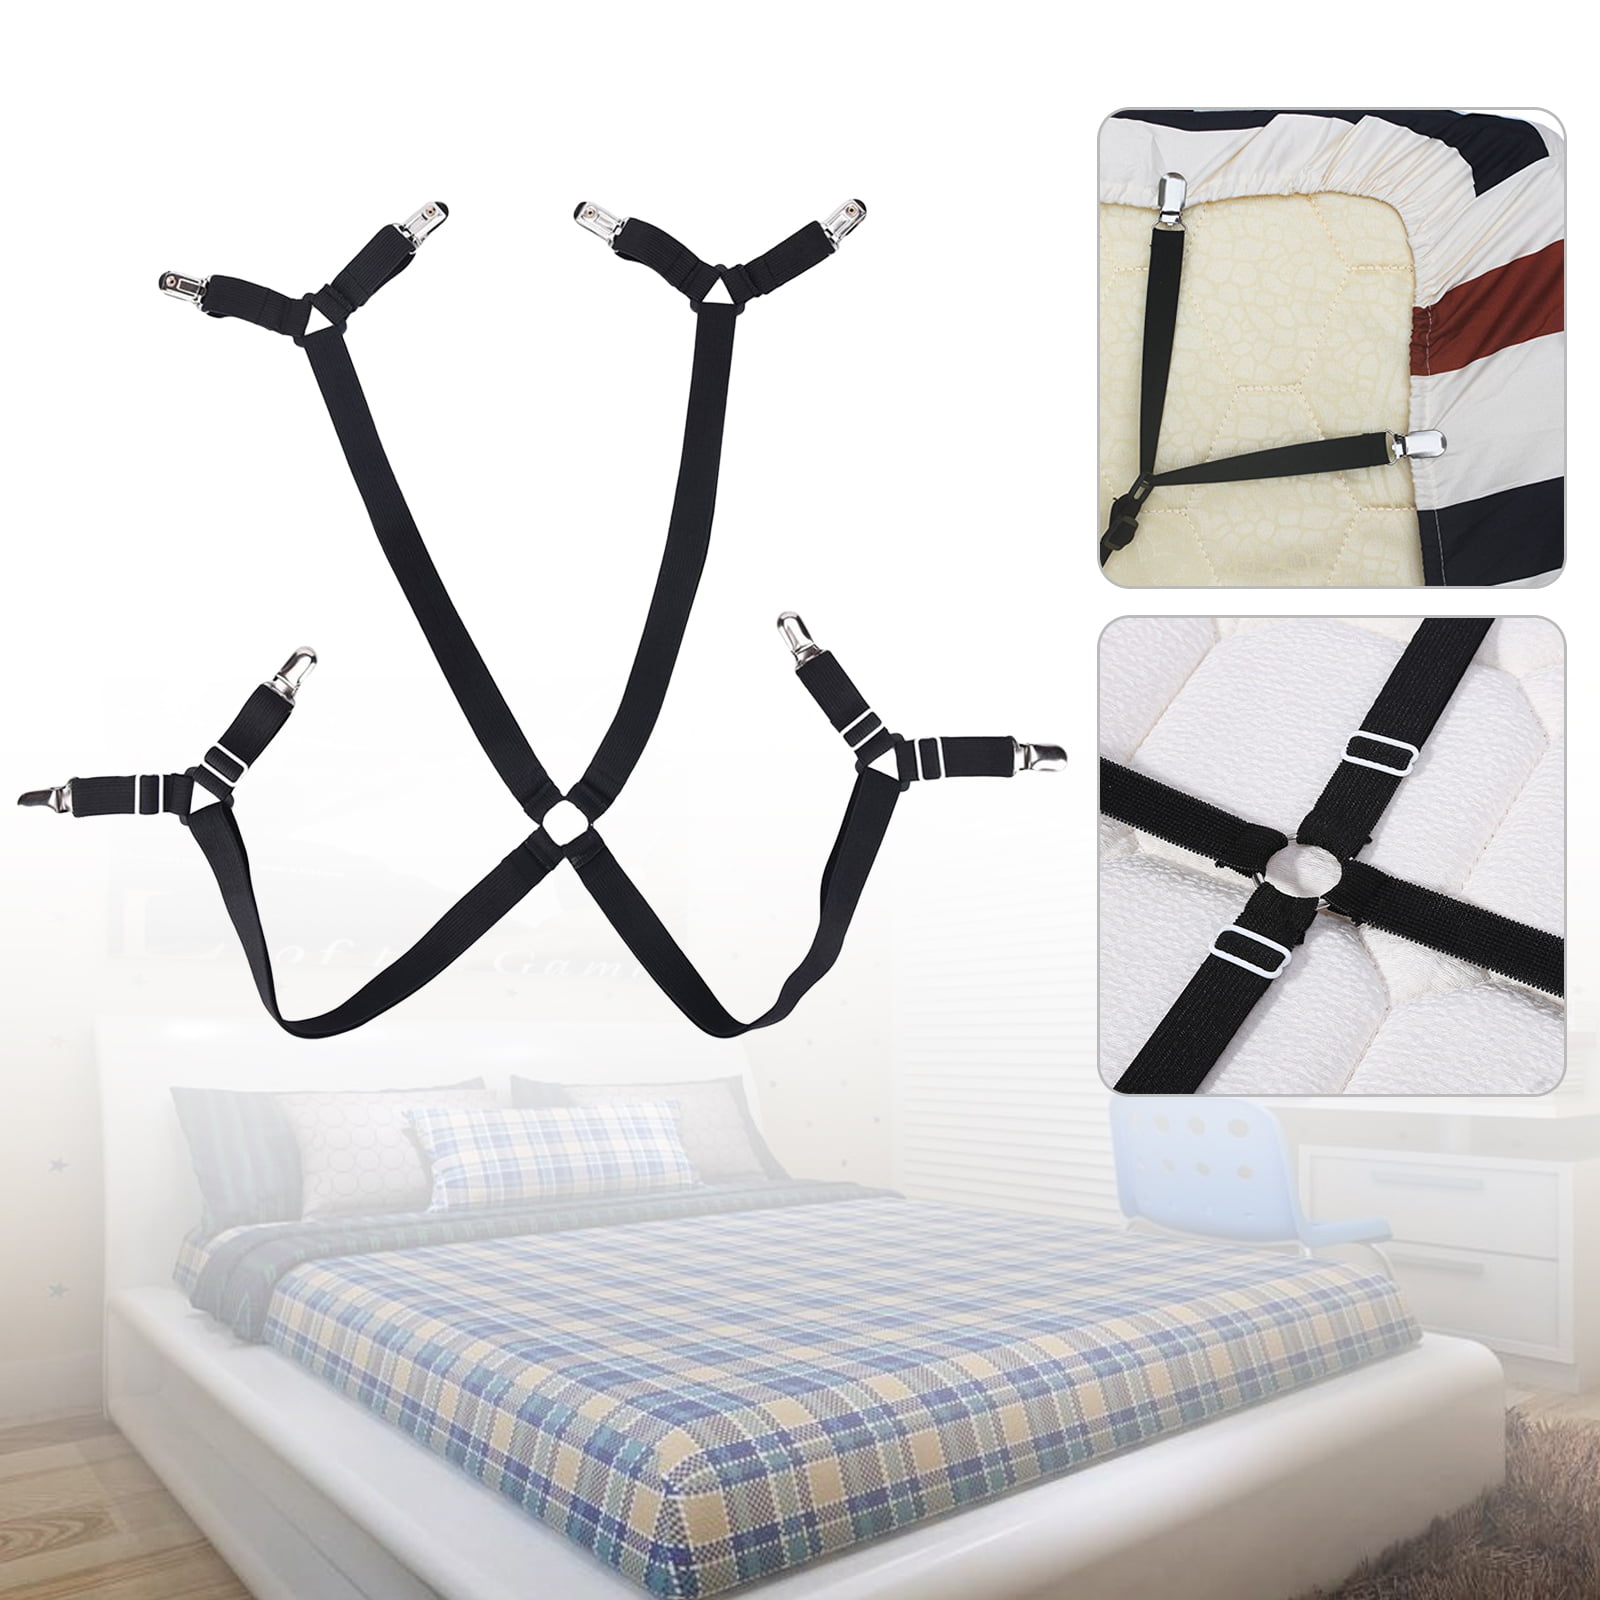 4 Pack Bed Sheet Fasteners Adjustable Bed Sheet Holder Straps 3 Way Mattress 